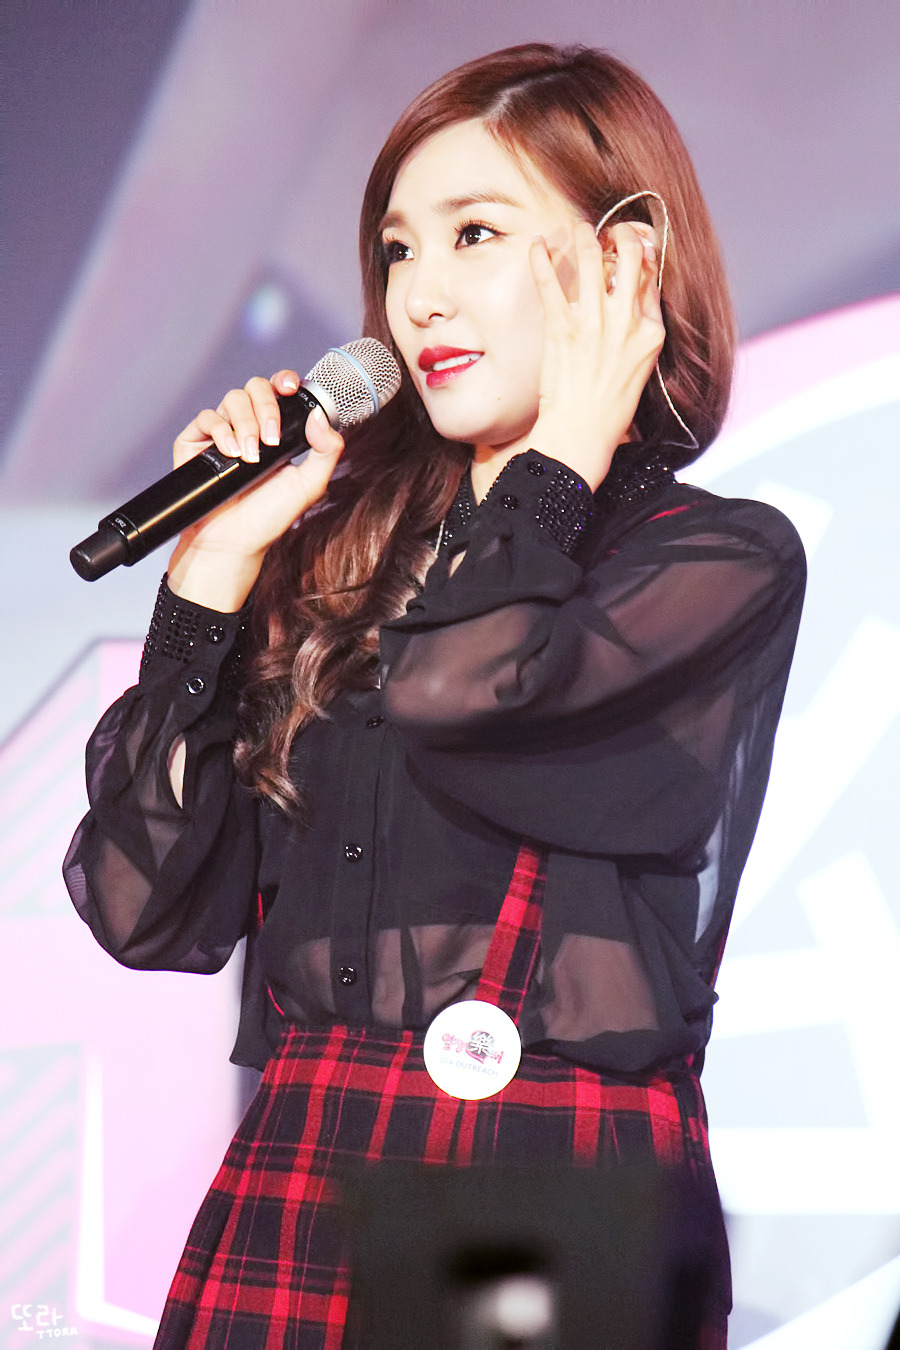 [PIC][11-11-2014]TaeTiSeo biểu diễn tại "Passion Concert 2014" ở Seoul Jamsil Gymnasium vào tối nay - Page 5 241C67455467380601ADEC